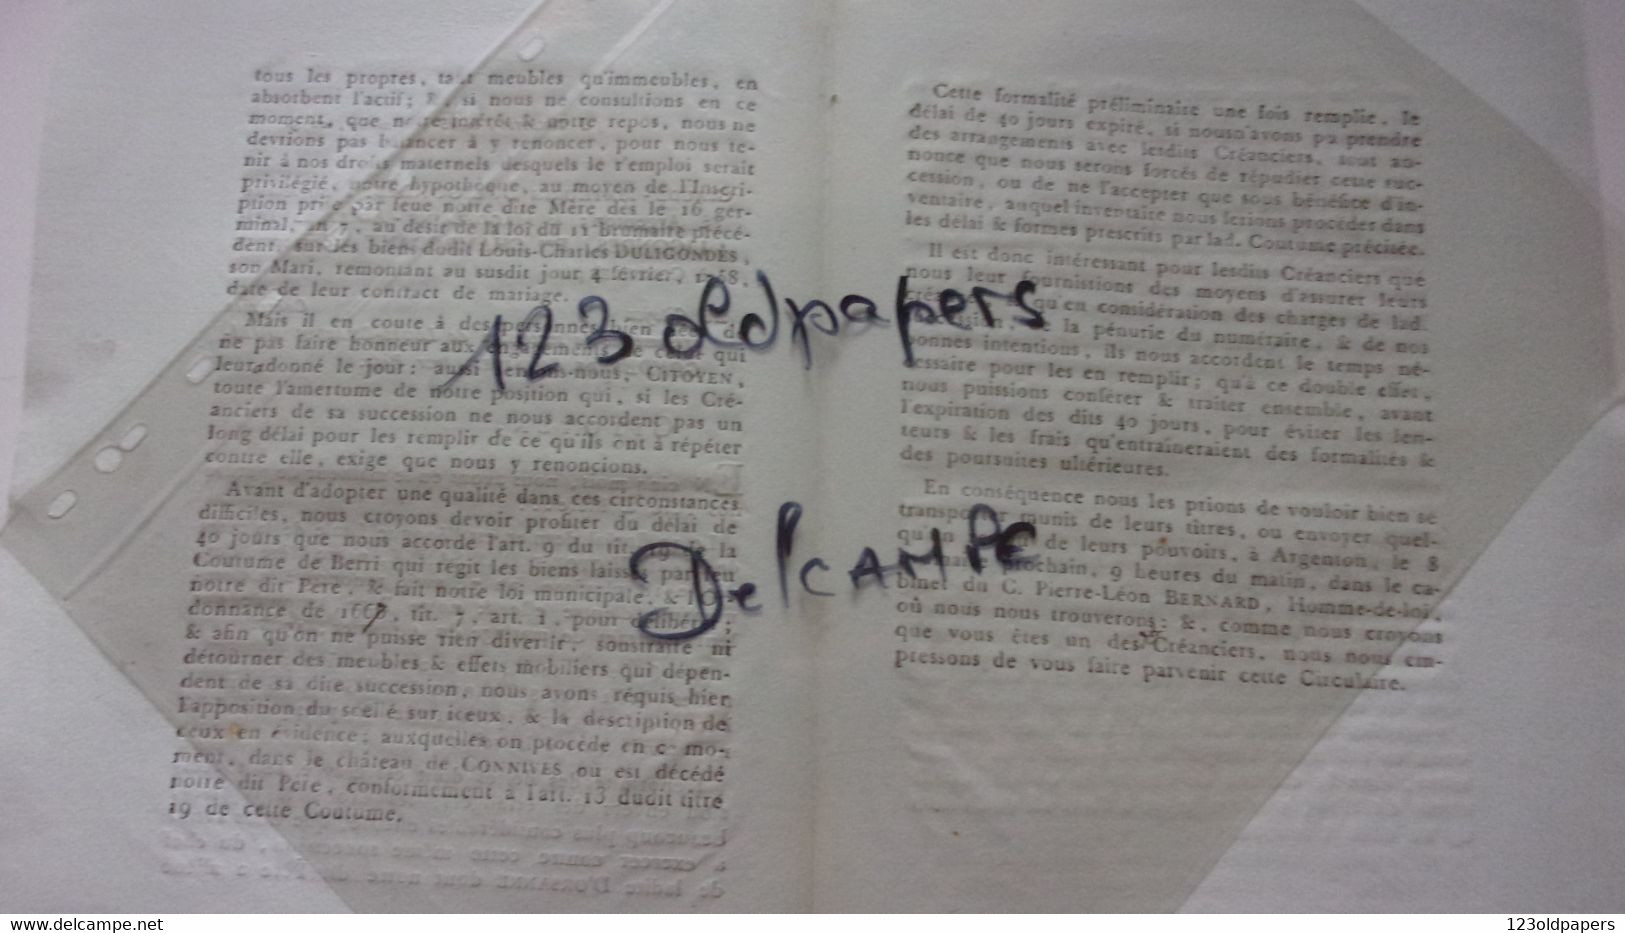 ️ ️ BERRY INDRE  1792   Citoyens Creance SUCCESSION LOUIS CHARLES DULIGONDES ARGENTON CHT CONNIVES SAINT GAULTIER) - Historical Documents